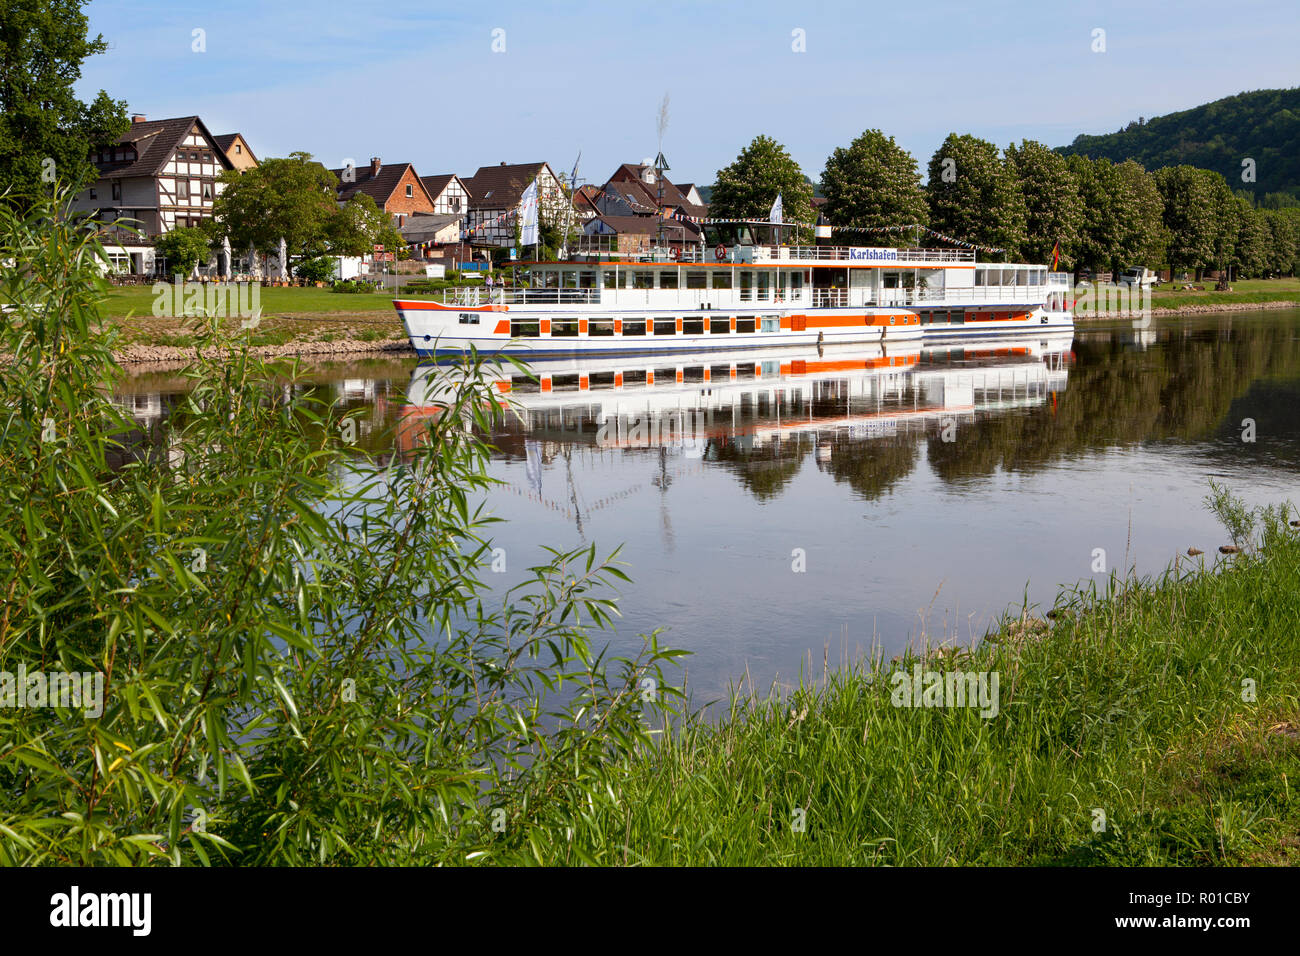 Passenger ship Karlshafen, Bodenwerder, birthplace of Baron Muenchhausen, Weserbergland, Lower Saxony, Germany, Europe Stock Photo